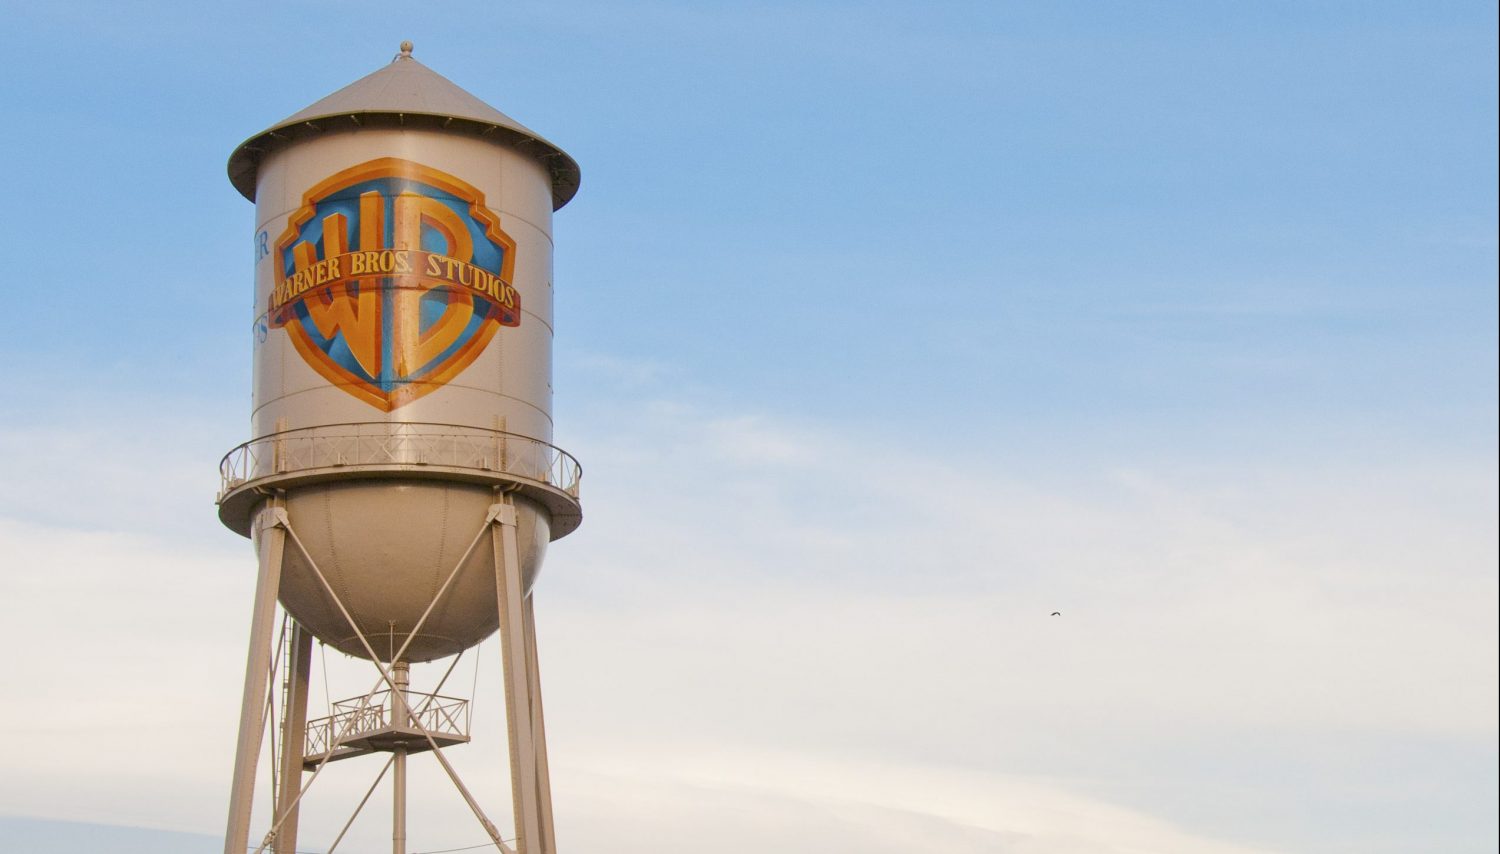 Warner Bros. Studio Tour Hollywood - Los Angeles, California - Official  Site Water Tower - Warner Bros. Studio Tour Hollywood - Los Angeles,  California - Official Site